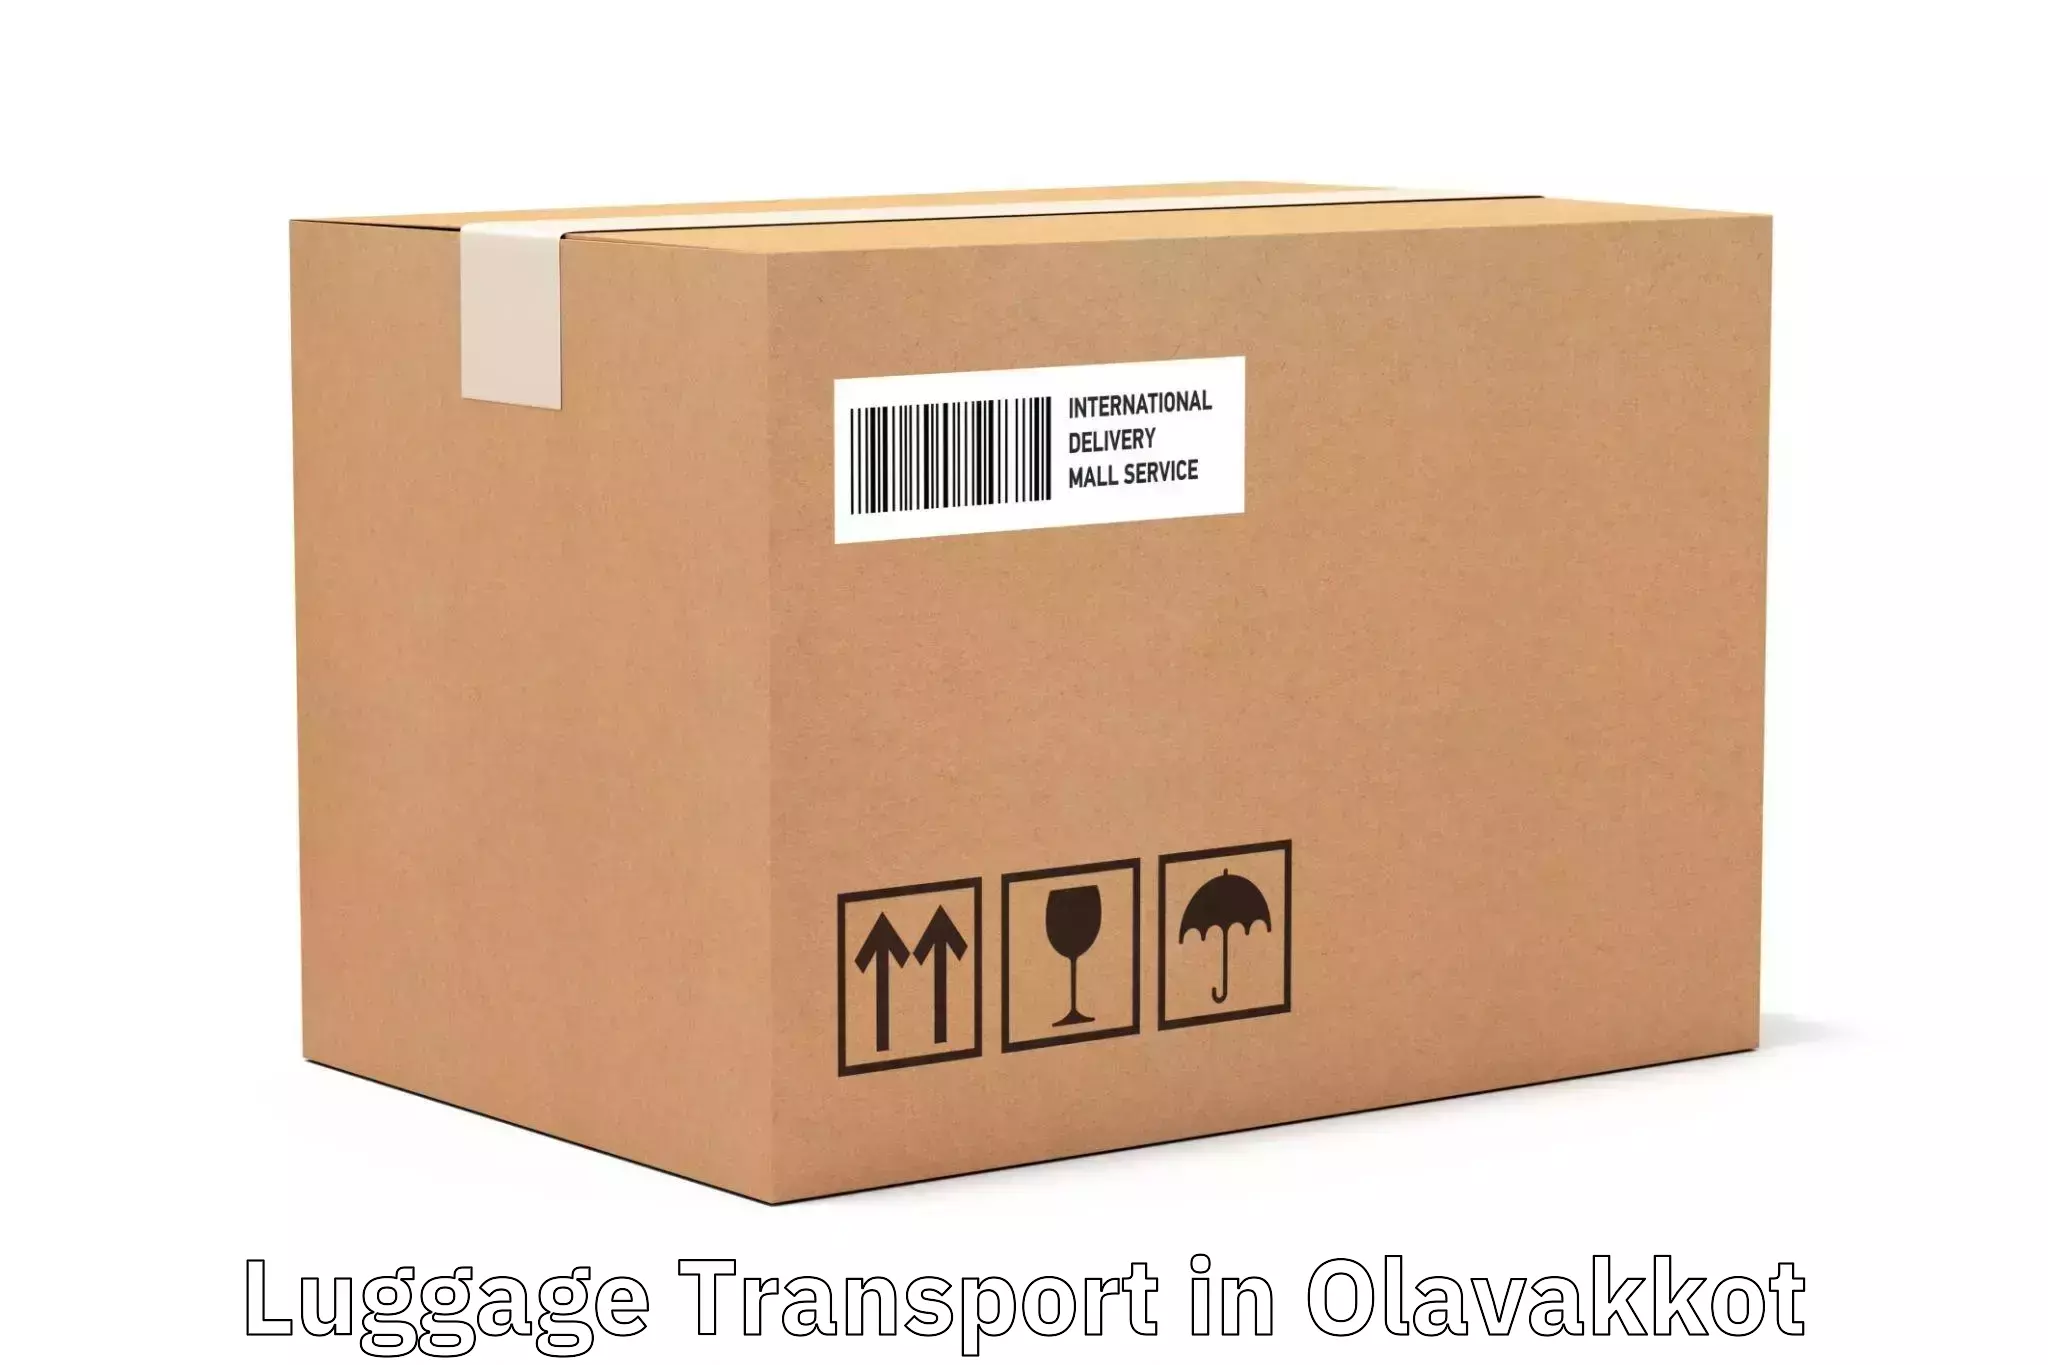 Luggage shipment tracking in Olavakkot